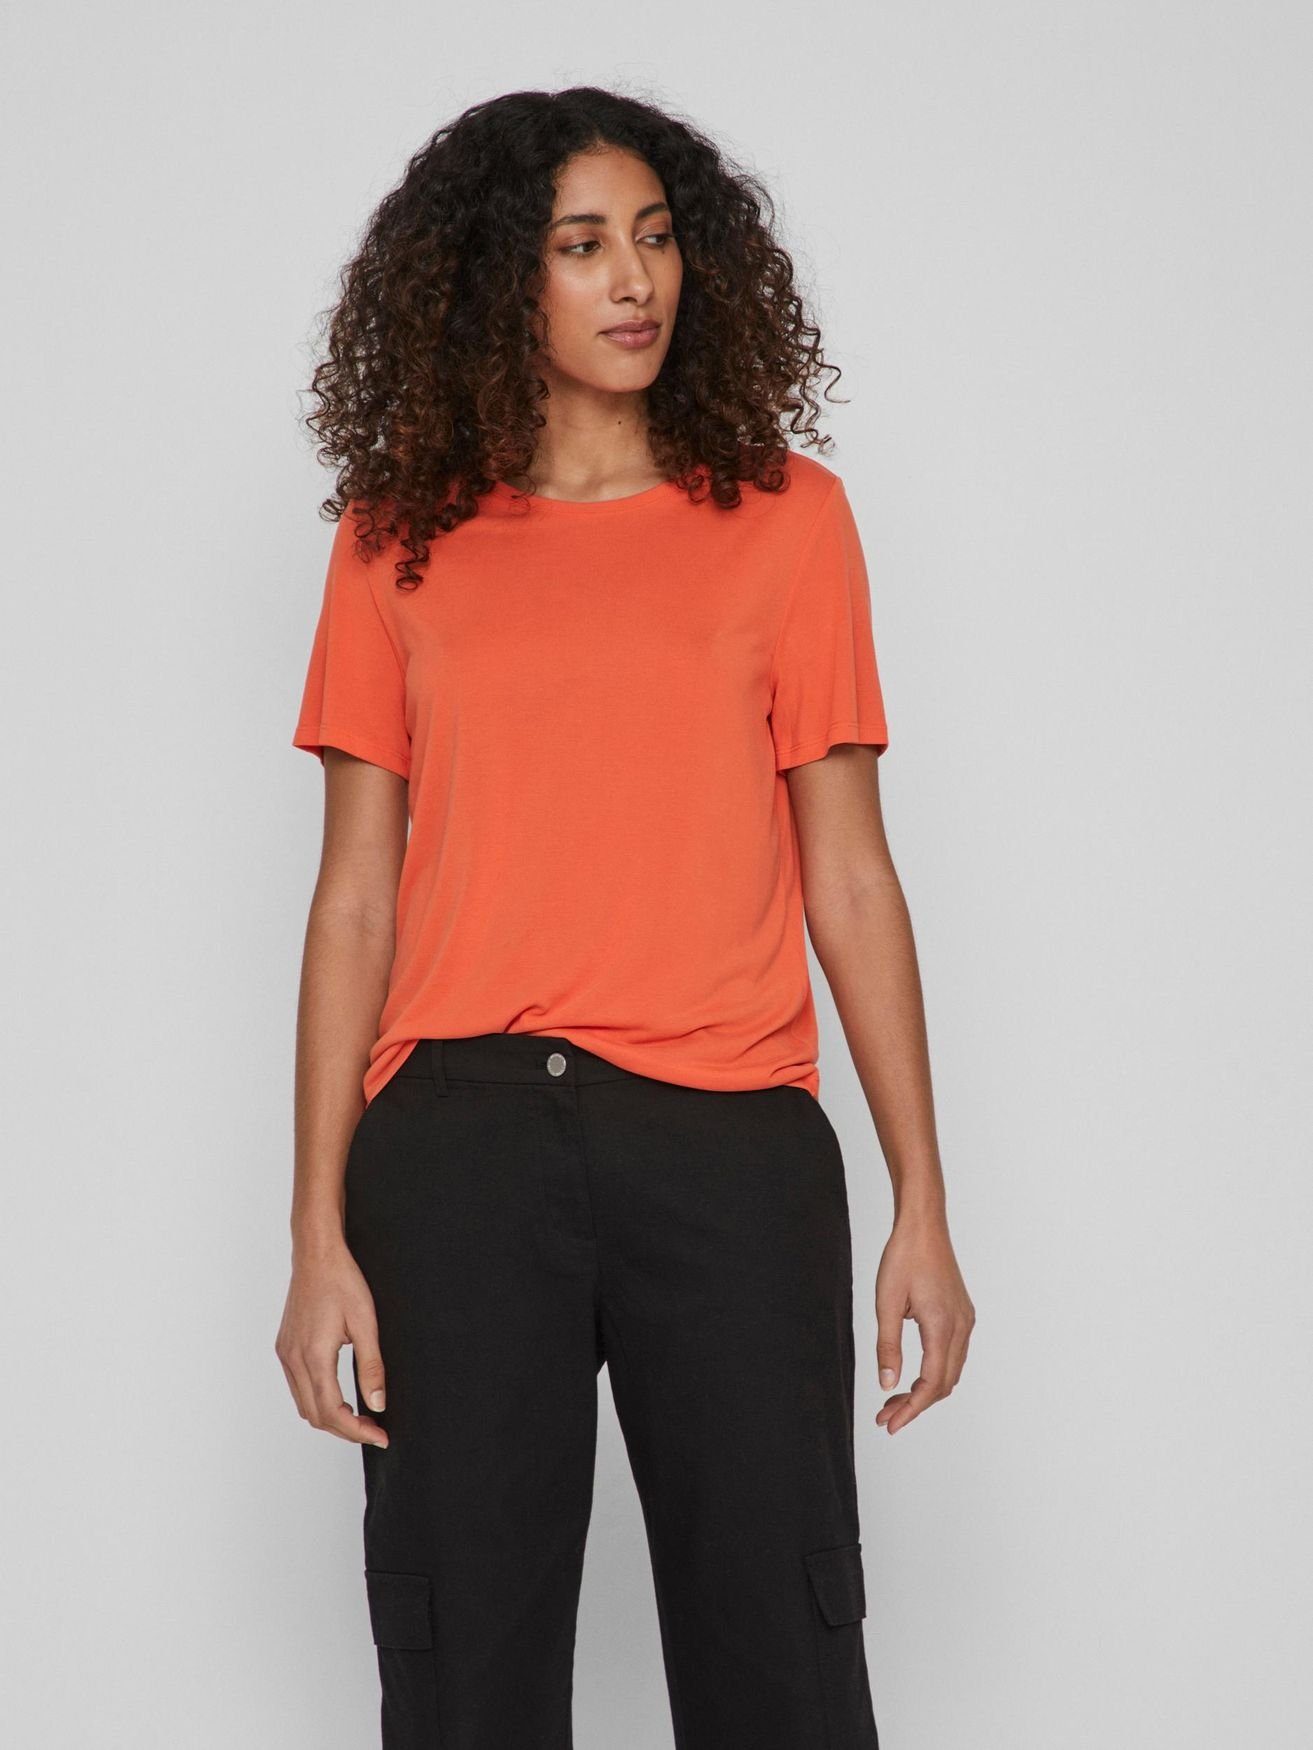 Oberteil in Kurzarm Basic T-Shirt VIMODALA T-Shirt Orange Vila Rundhals 4870 Top